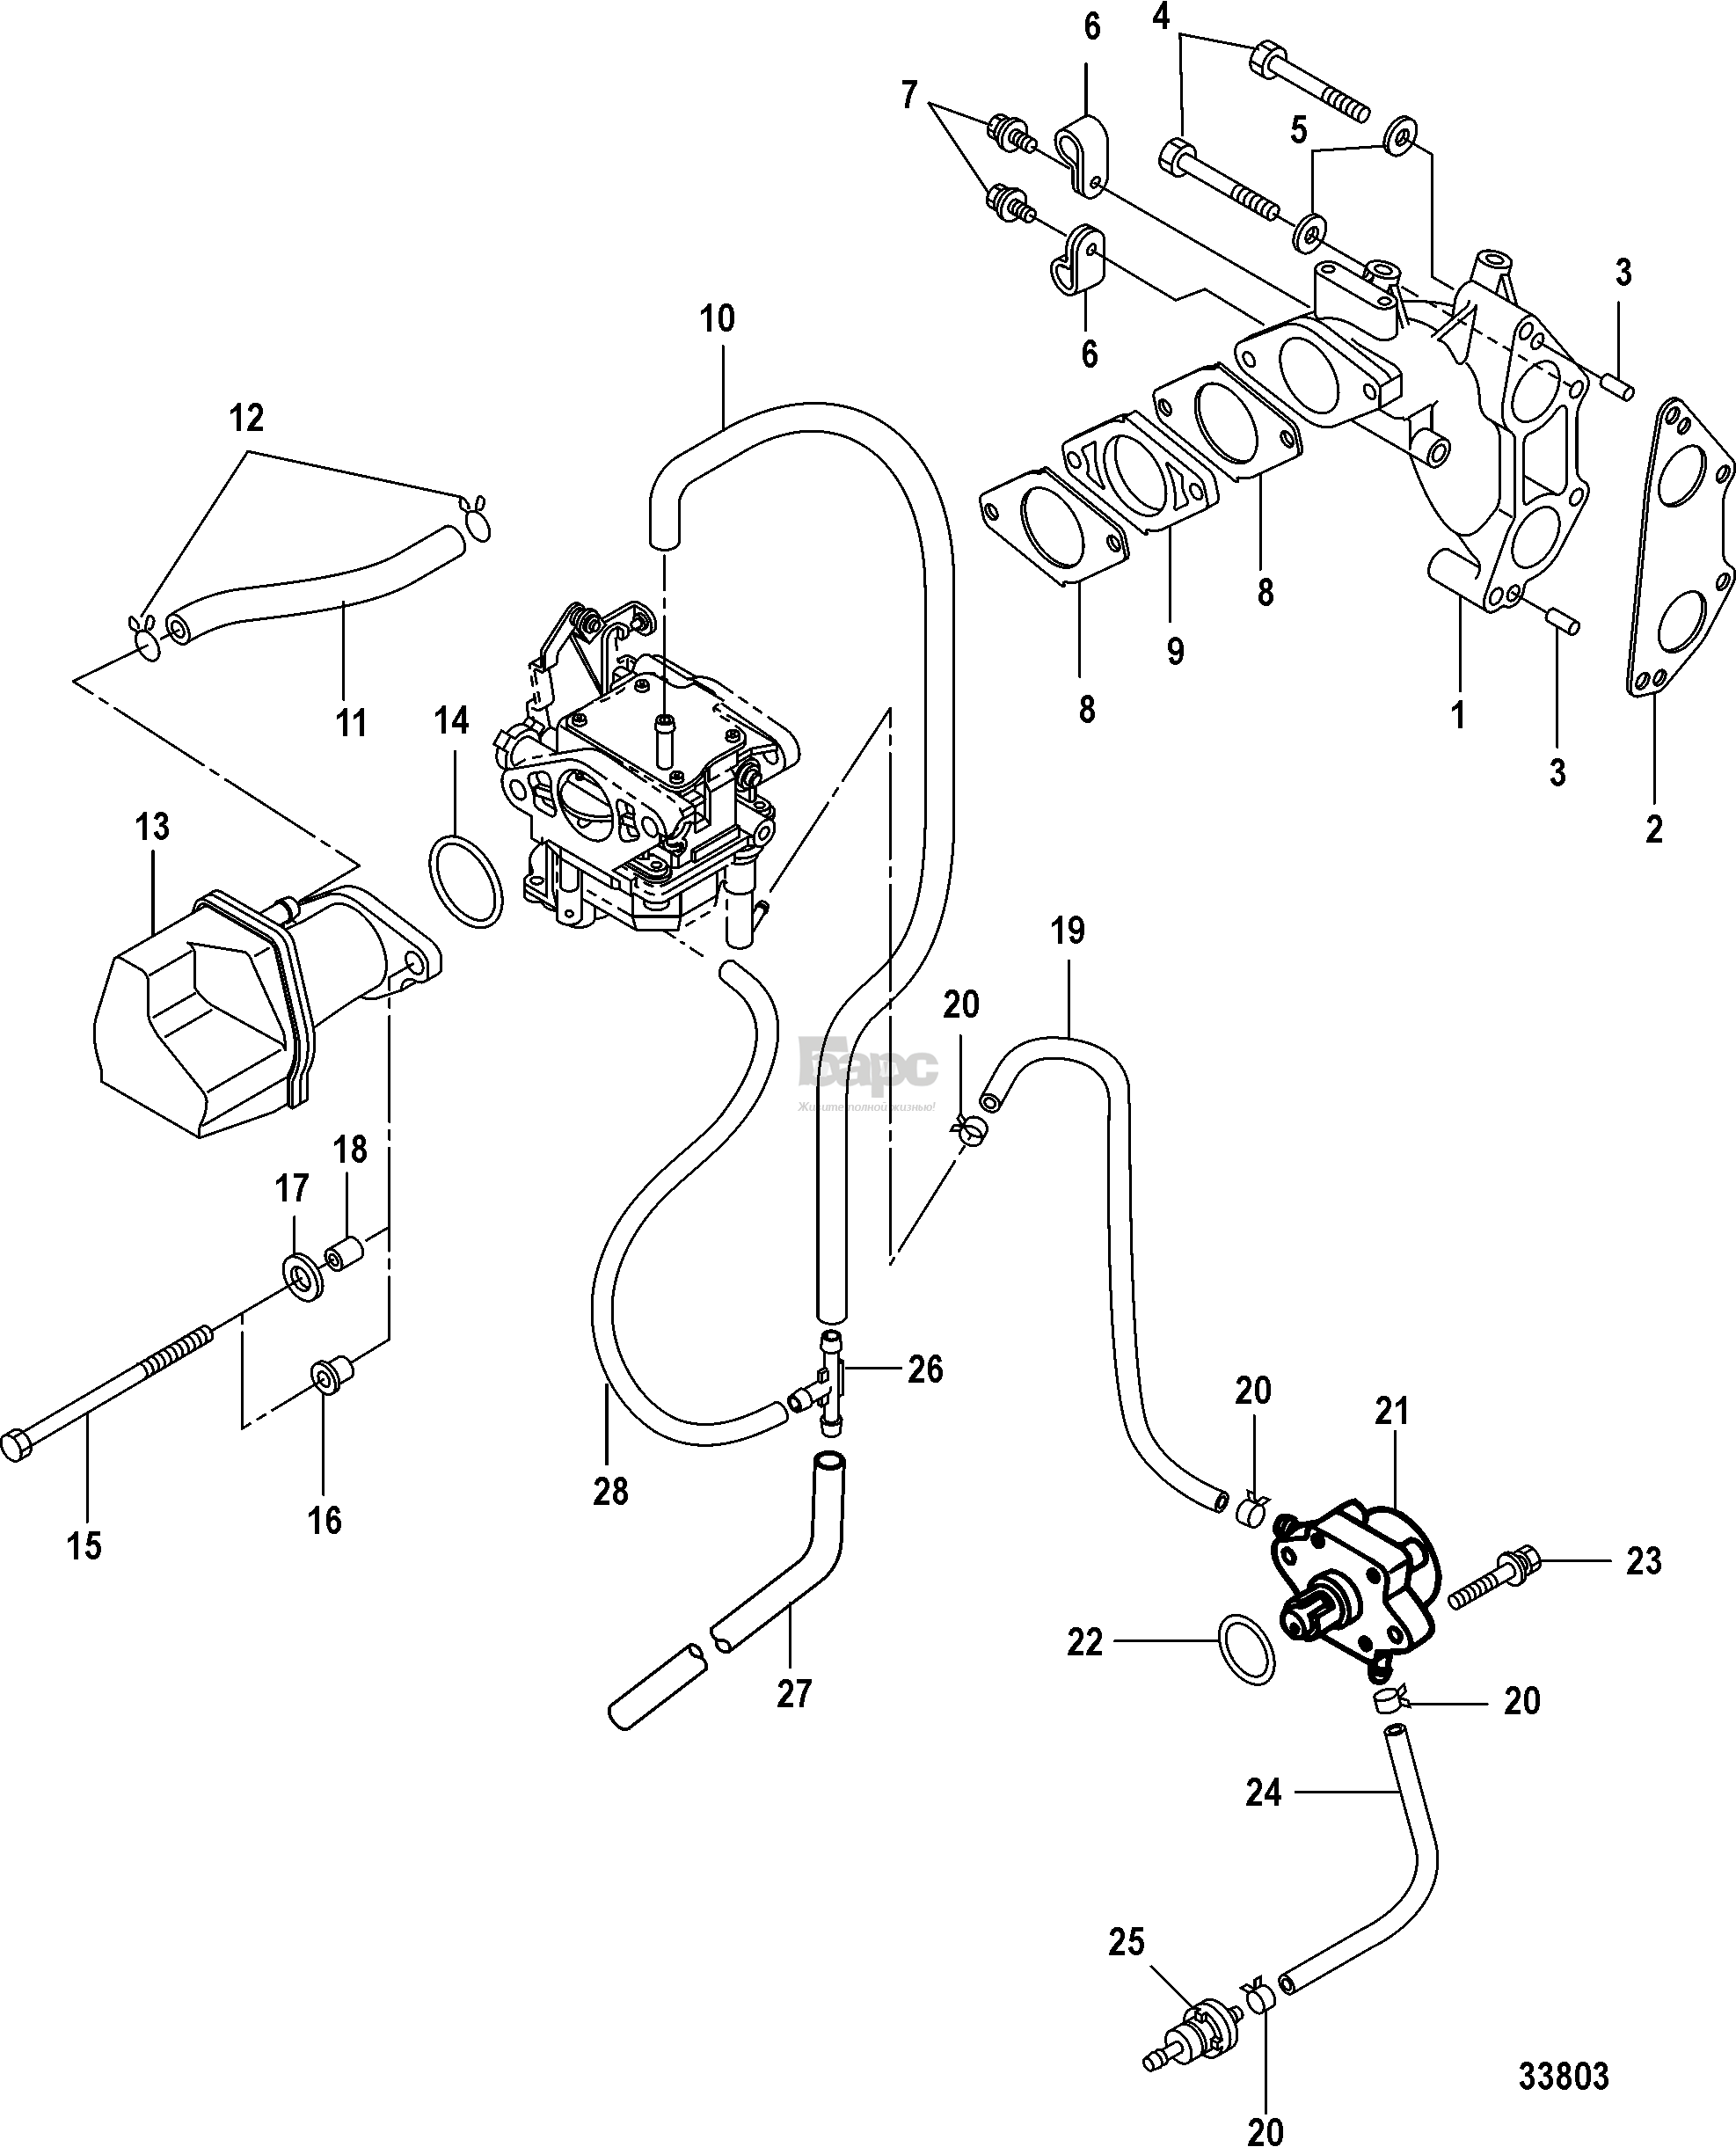 Intake Manifold and Fuel Pump